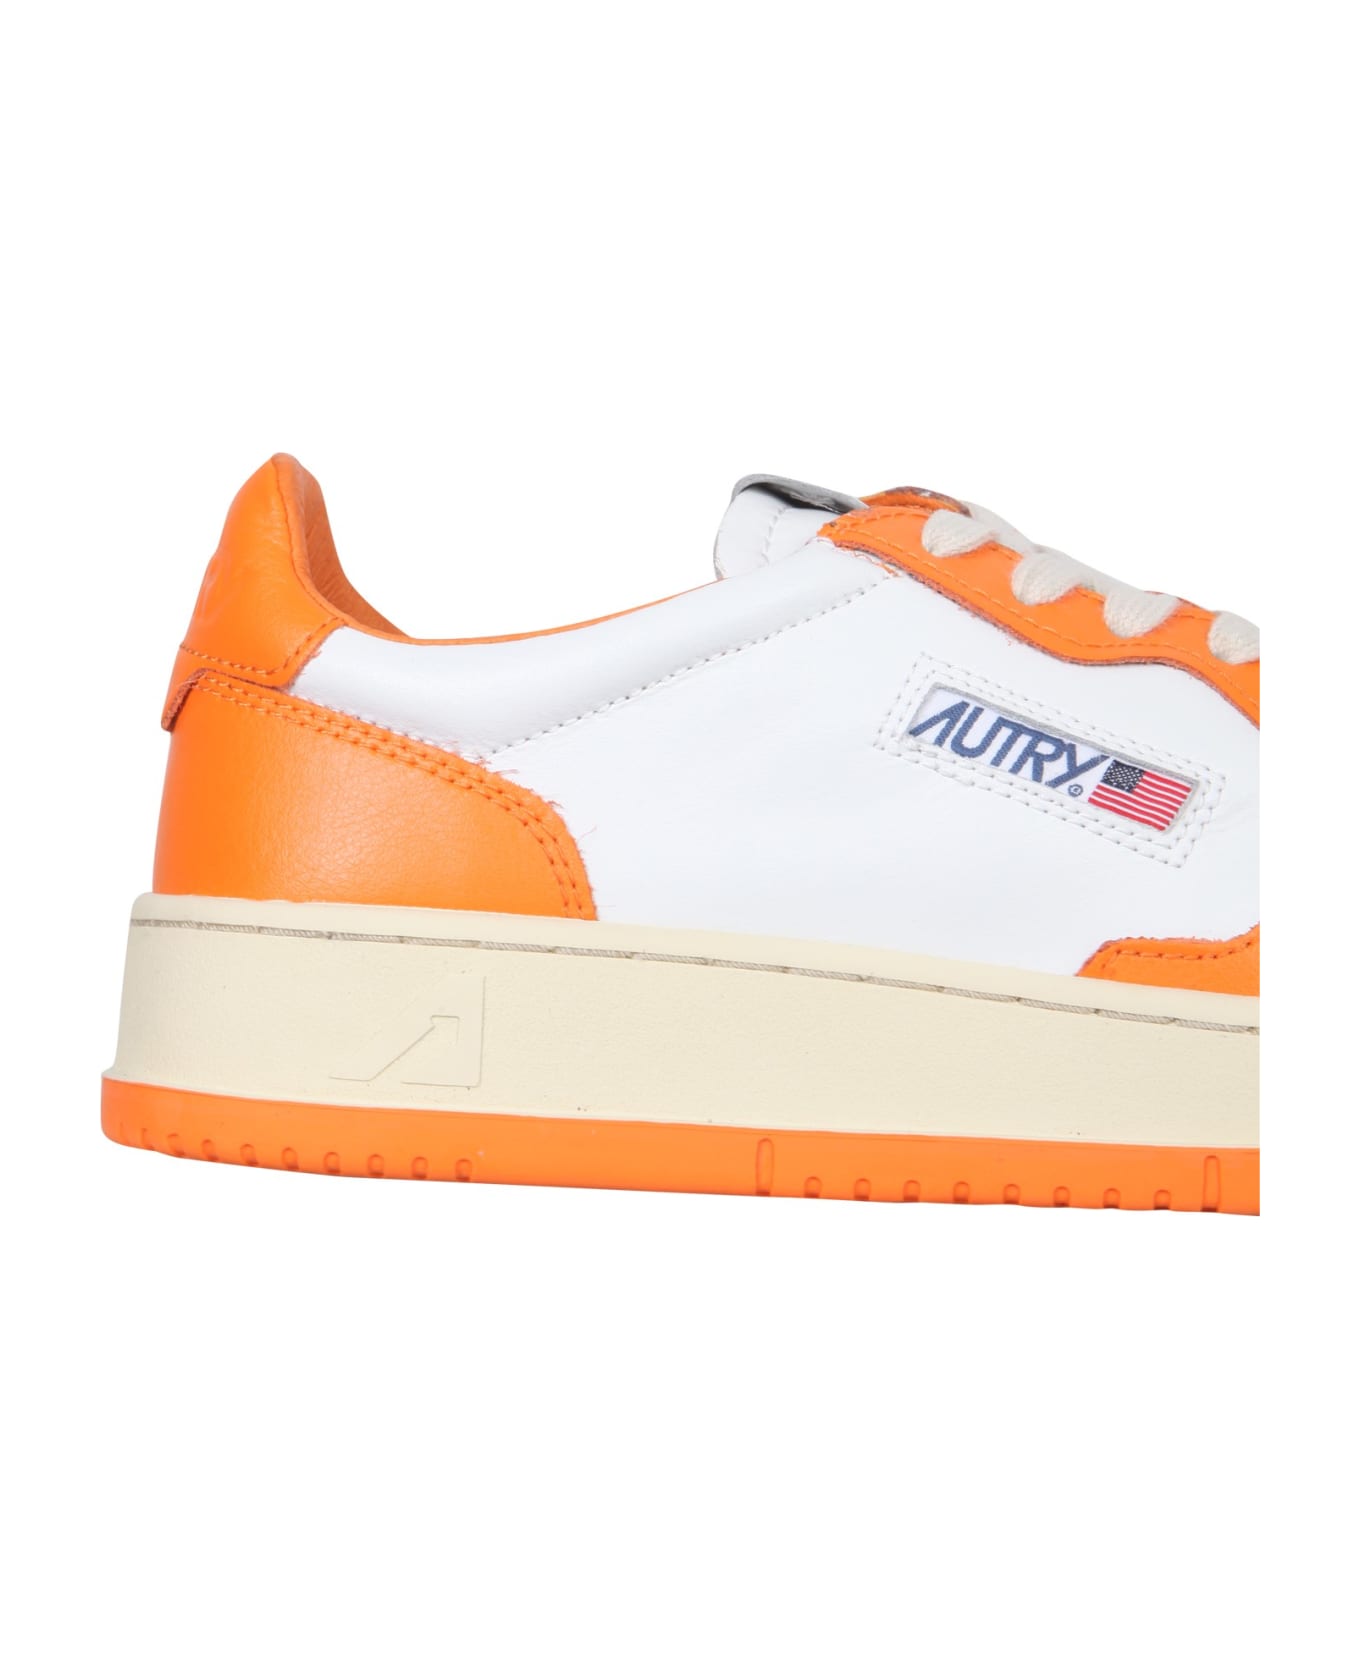 Autry Medalist Low Sneakers - White Orange スニーカー